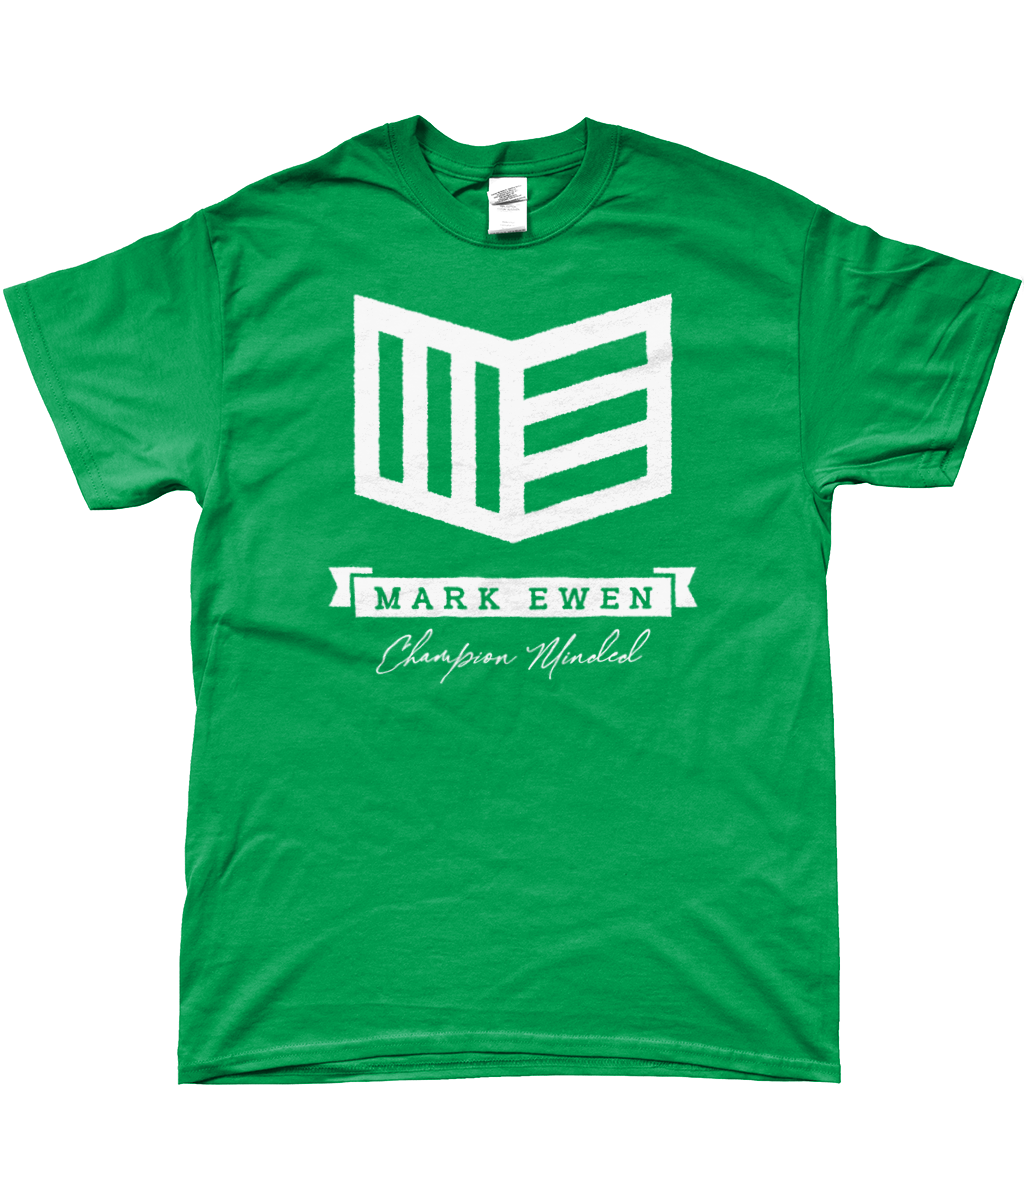 Mark Ewen Chest logo t-shirt